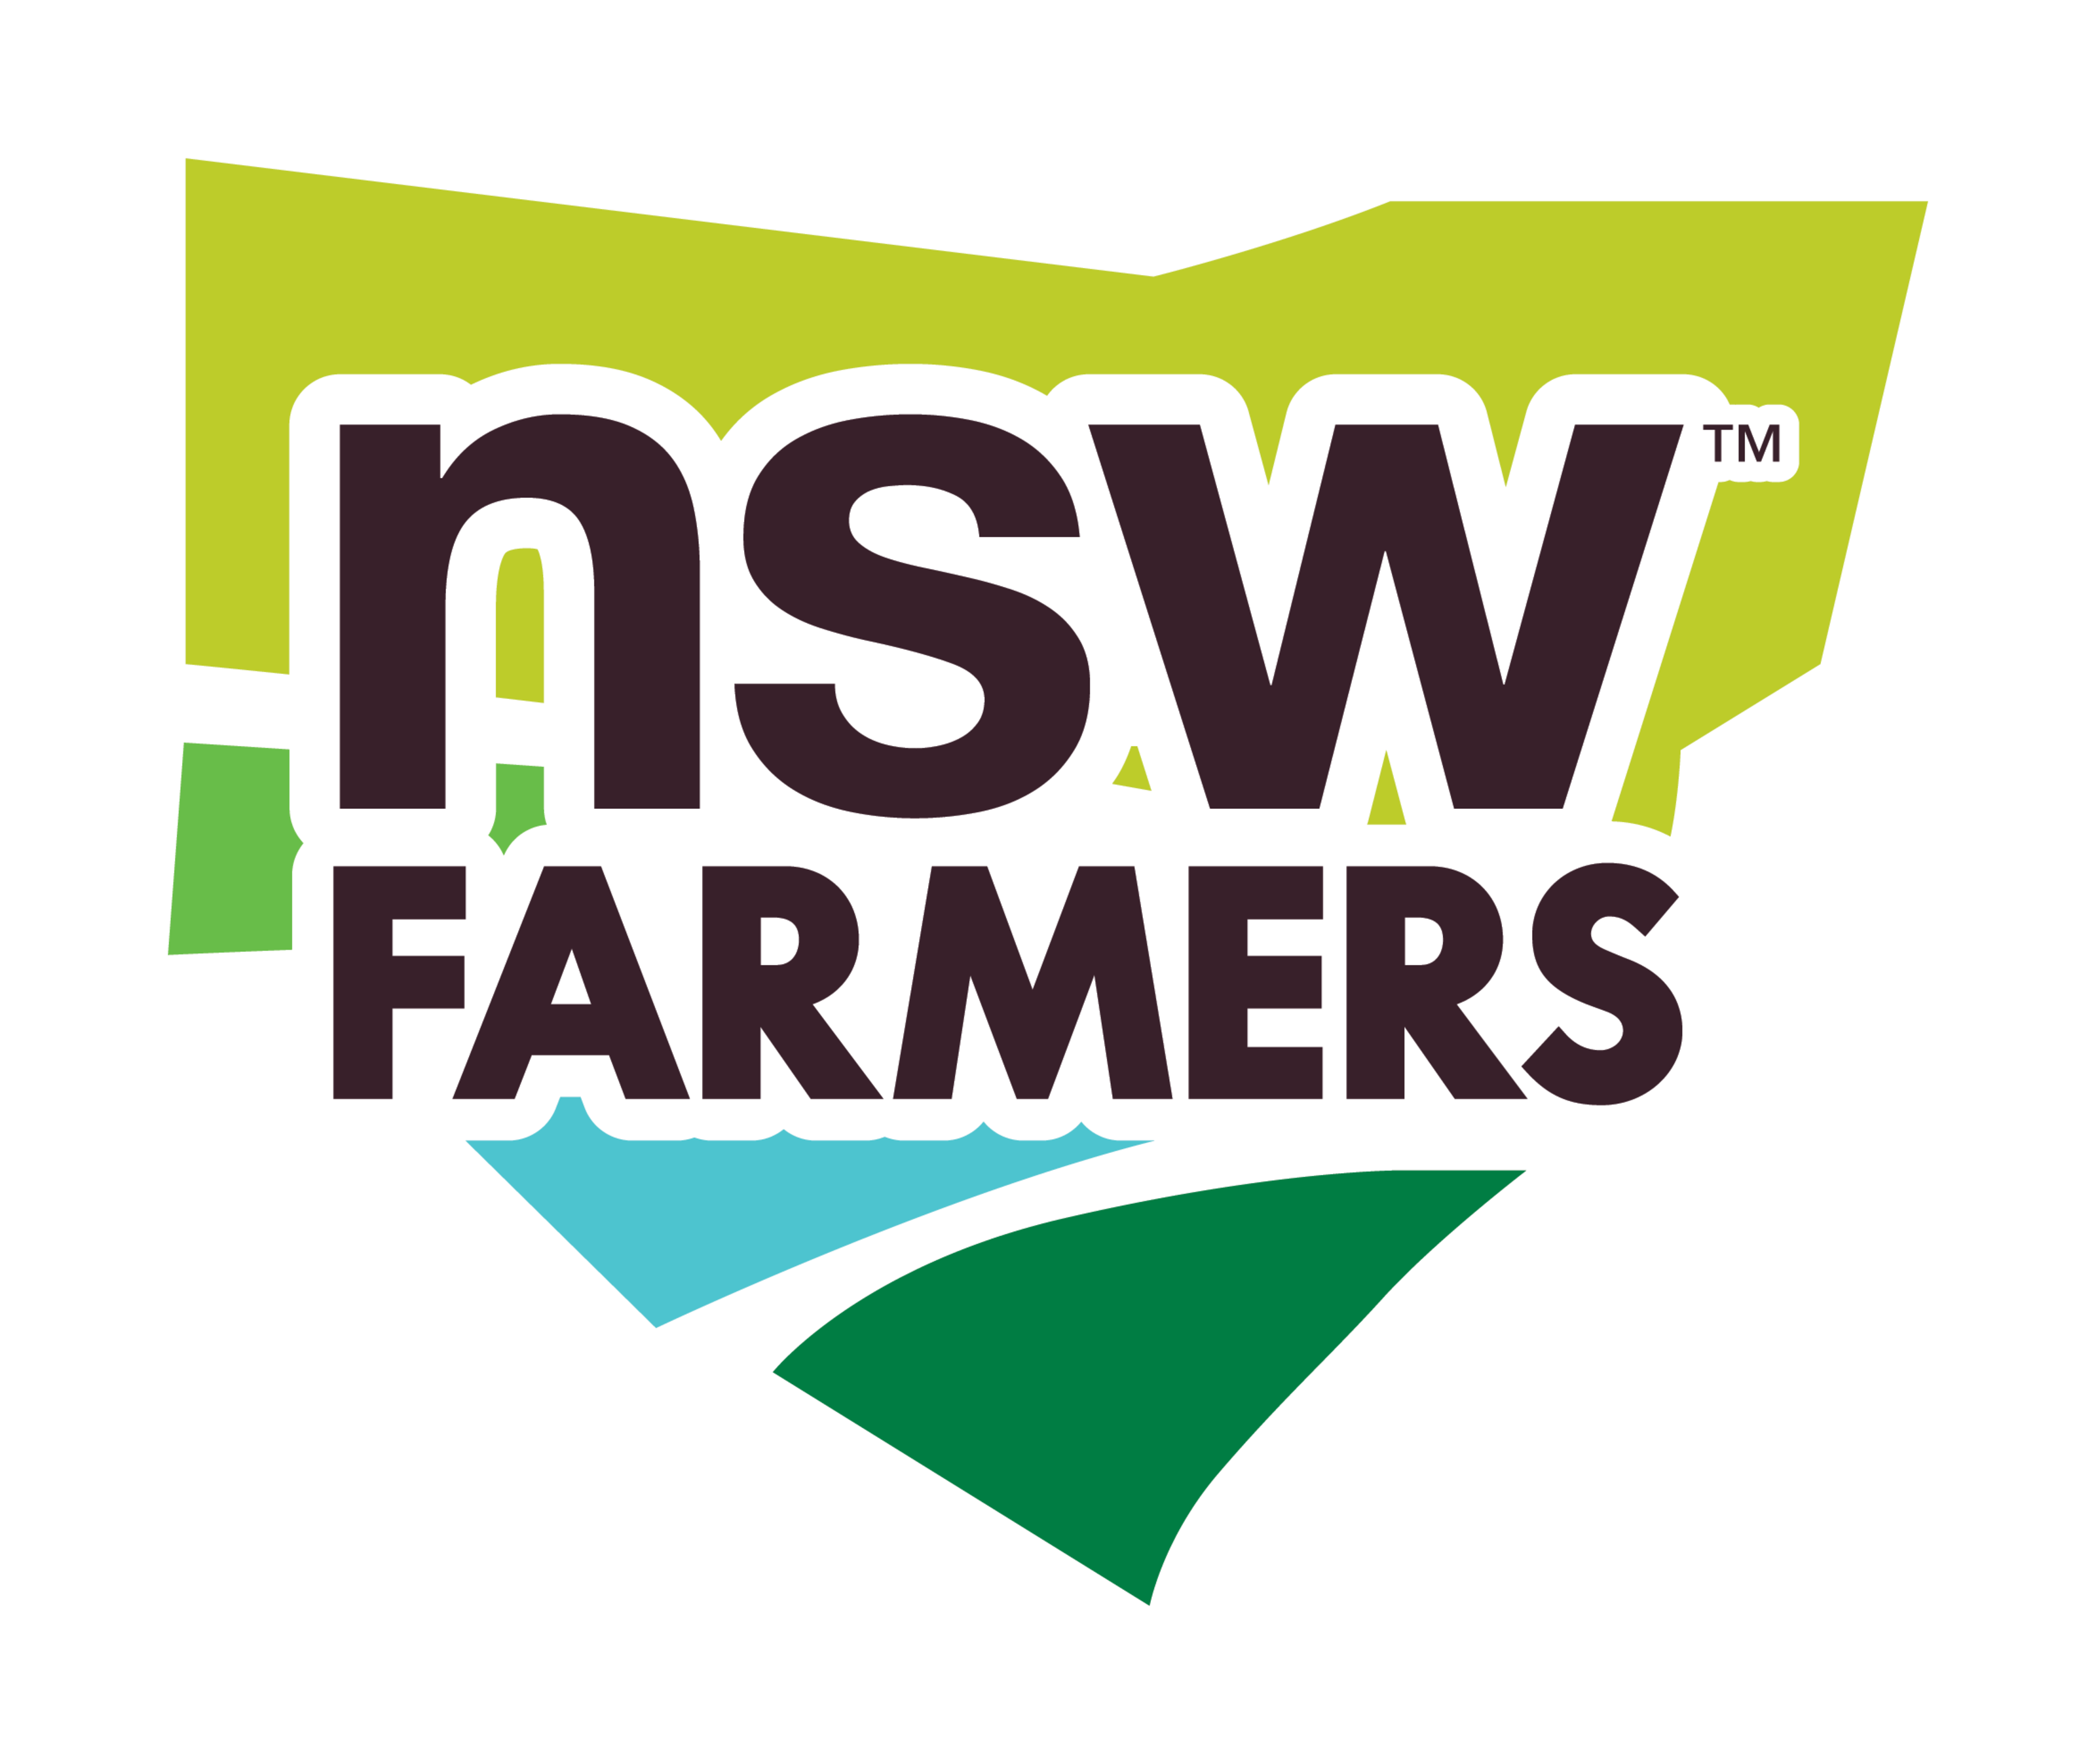 New south wales farmers logo.